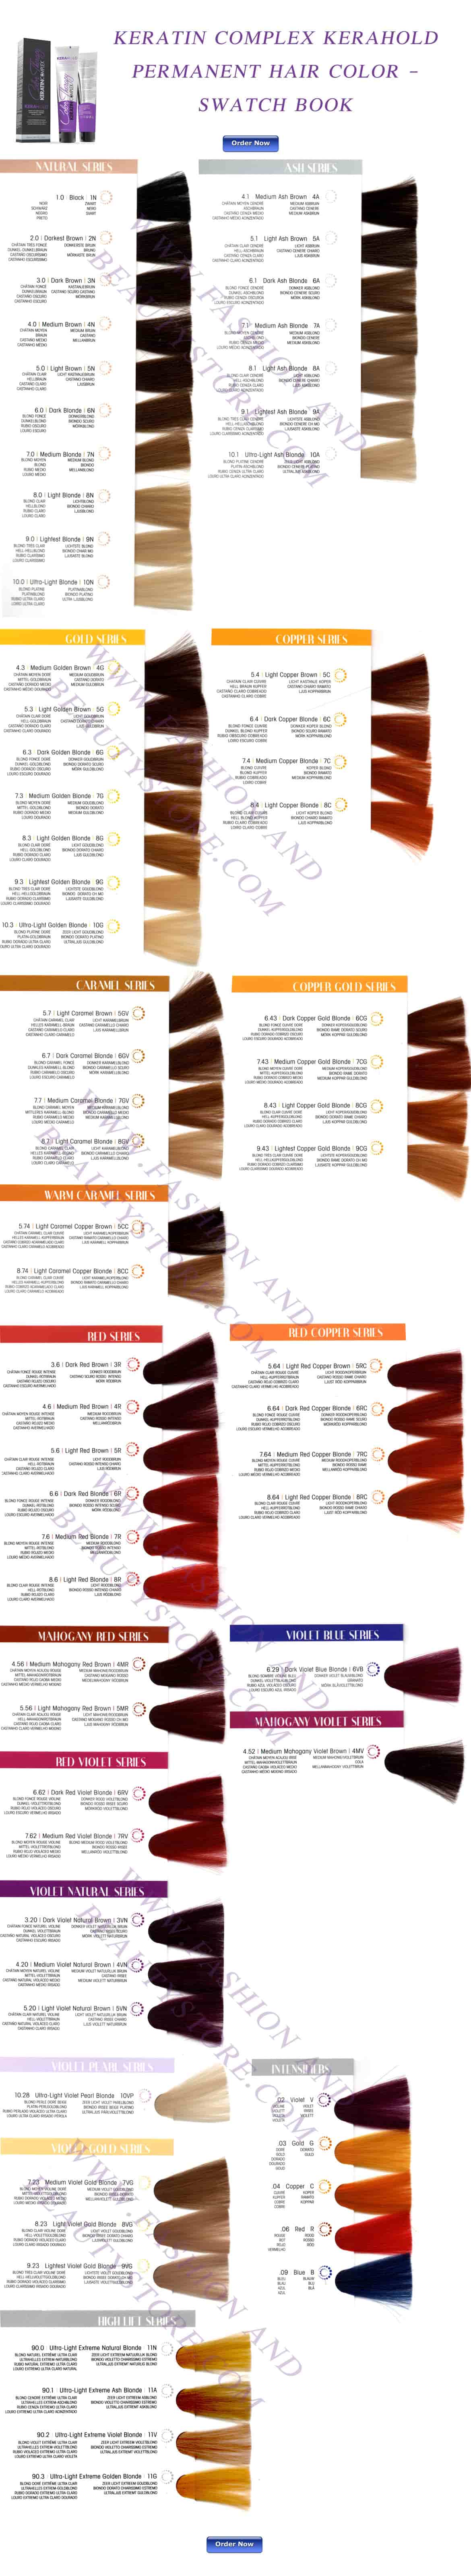 Pravana Hair Color Swatch Book